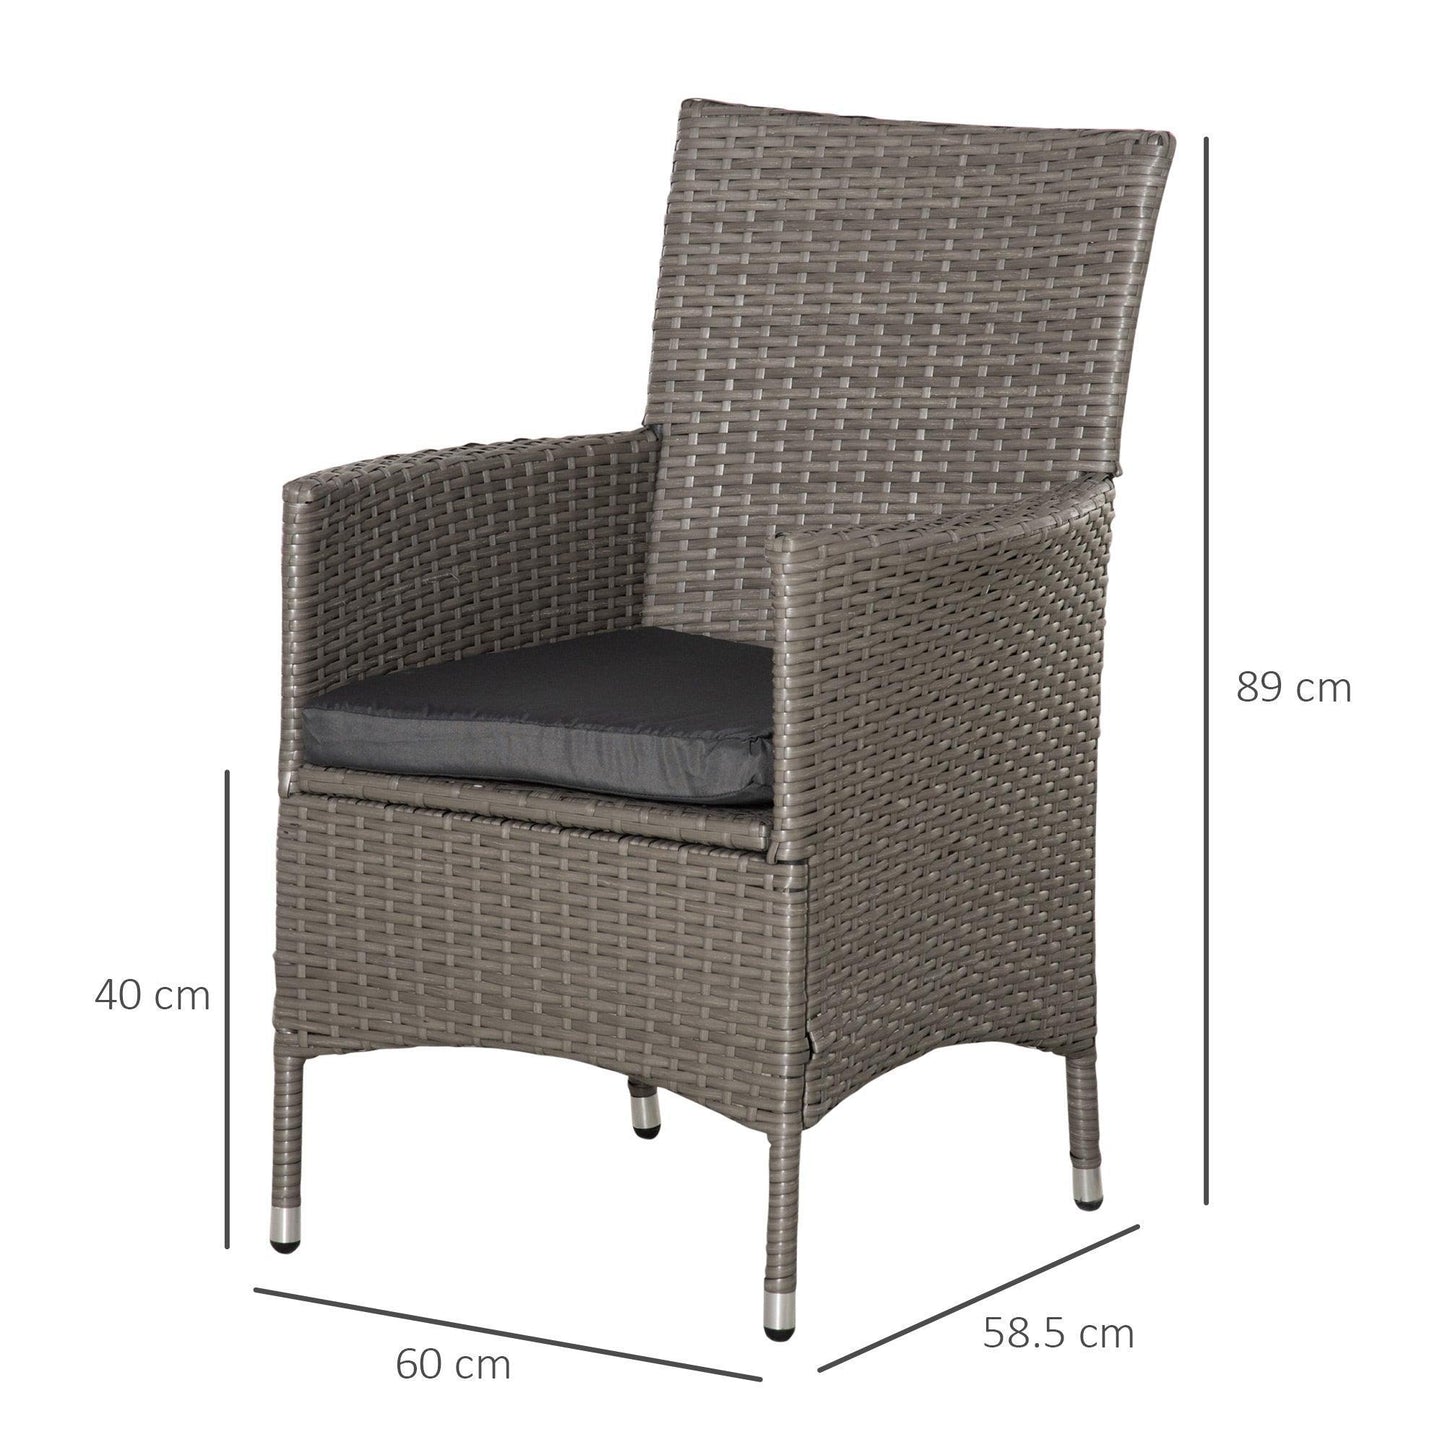 Outsunny 2-Seater Rattan Patio Chair - Grey - ALL4U RETAILER LTD